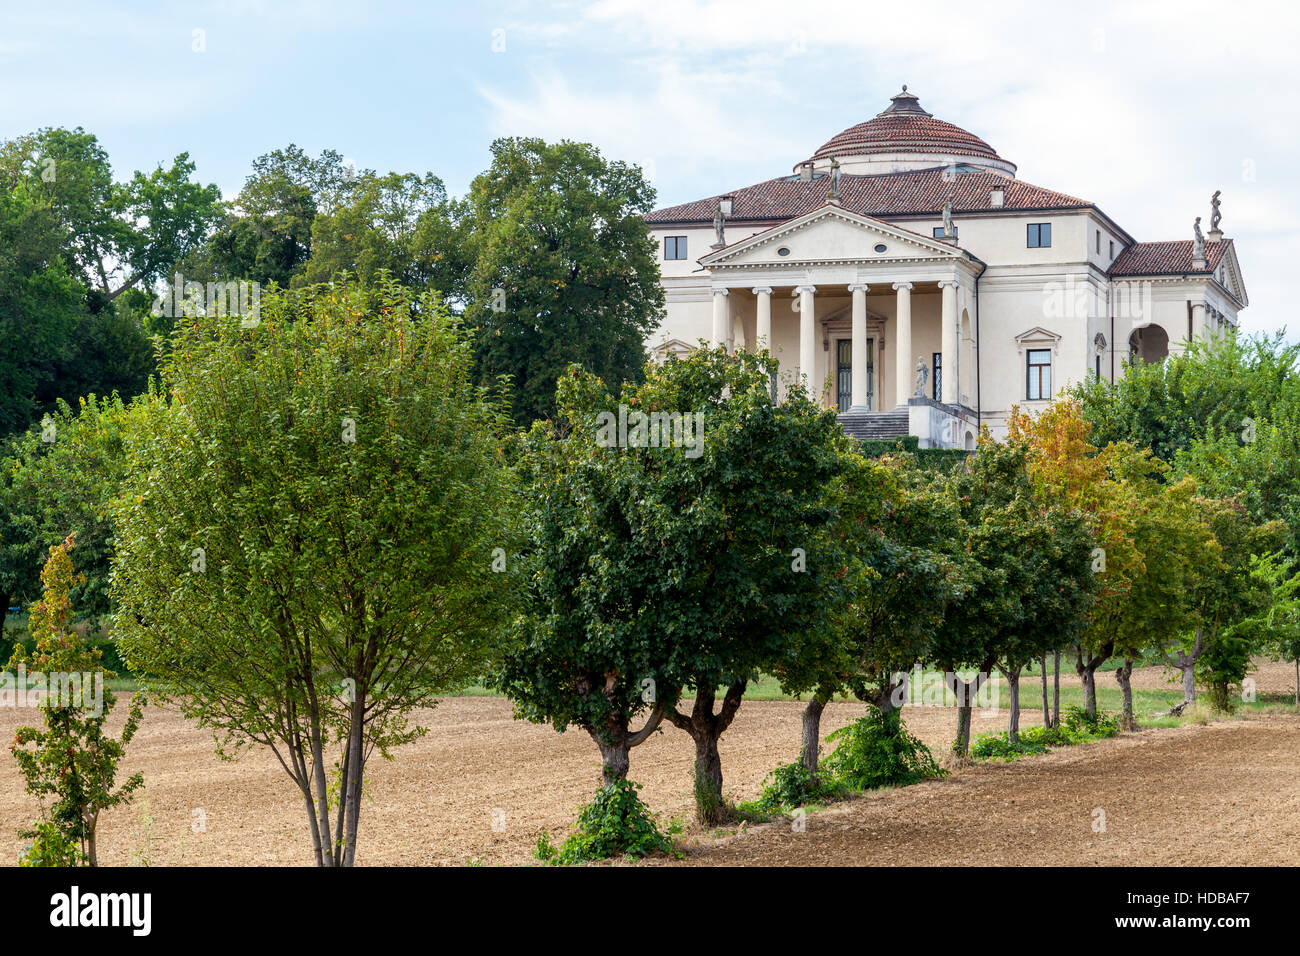 La célèbre villa Rotonda par l'architecte italien Andrea Palladio, Vicenza, Vénétie, Italie. Banque D'Images